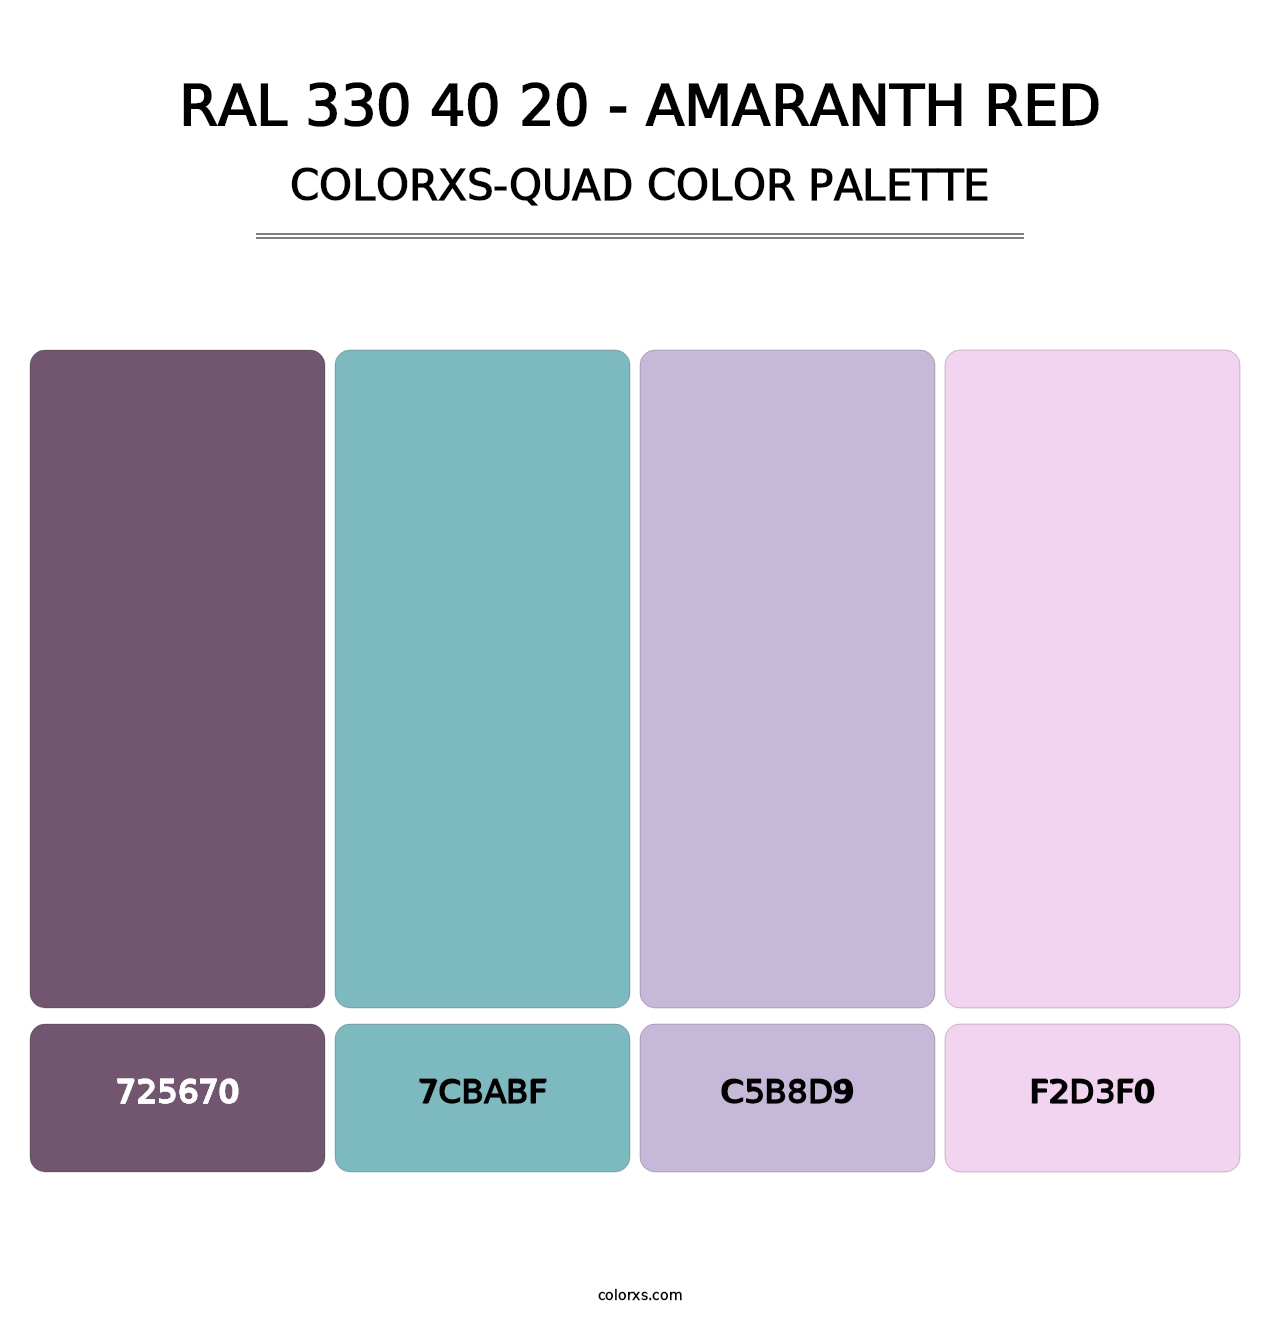 RAL 330 40 20 - Amaranth Red - Colorxs Quad Palette